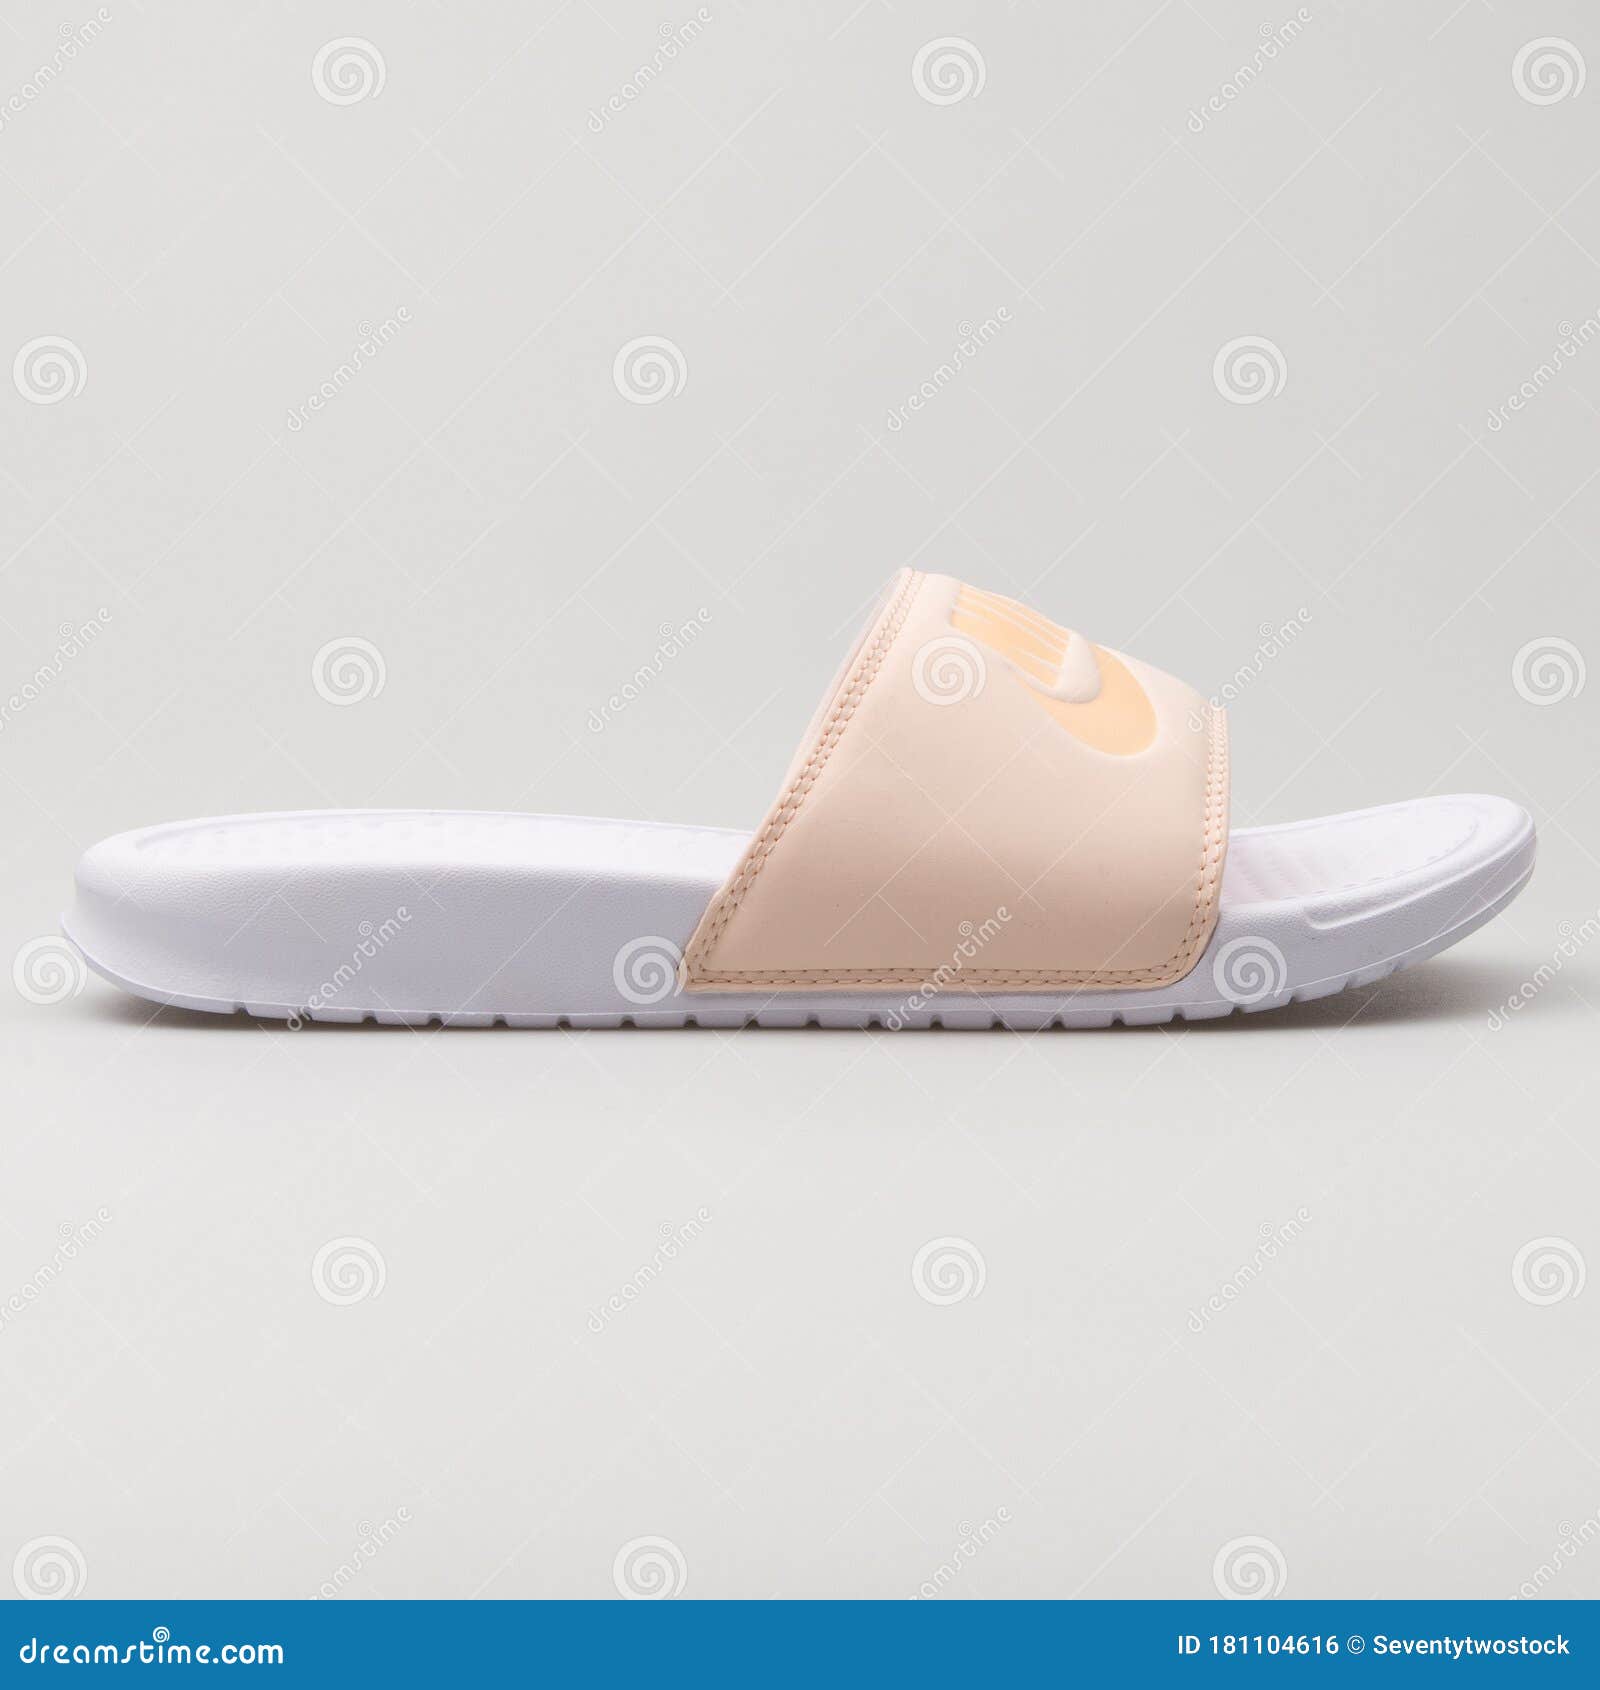 Nike JDI QS Pastel Orange and White Sandal Editorial Photo - Image of beach, laces: 181104616